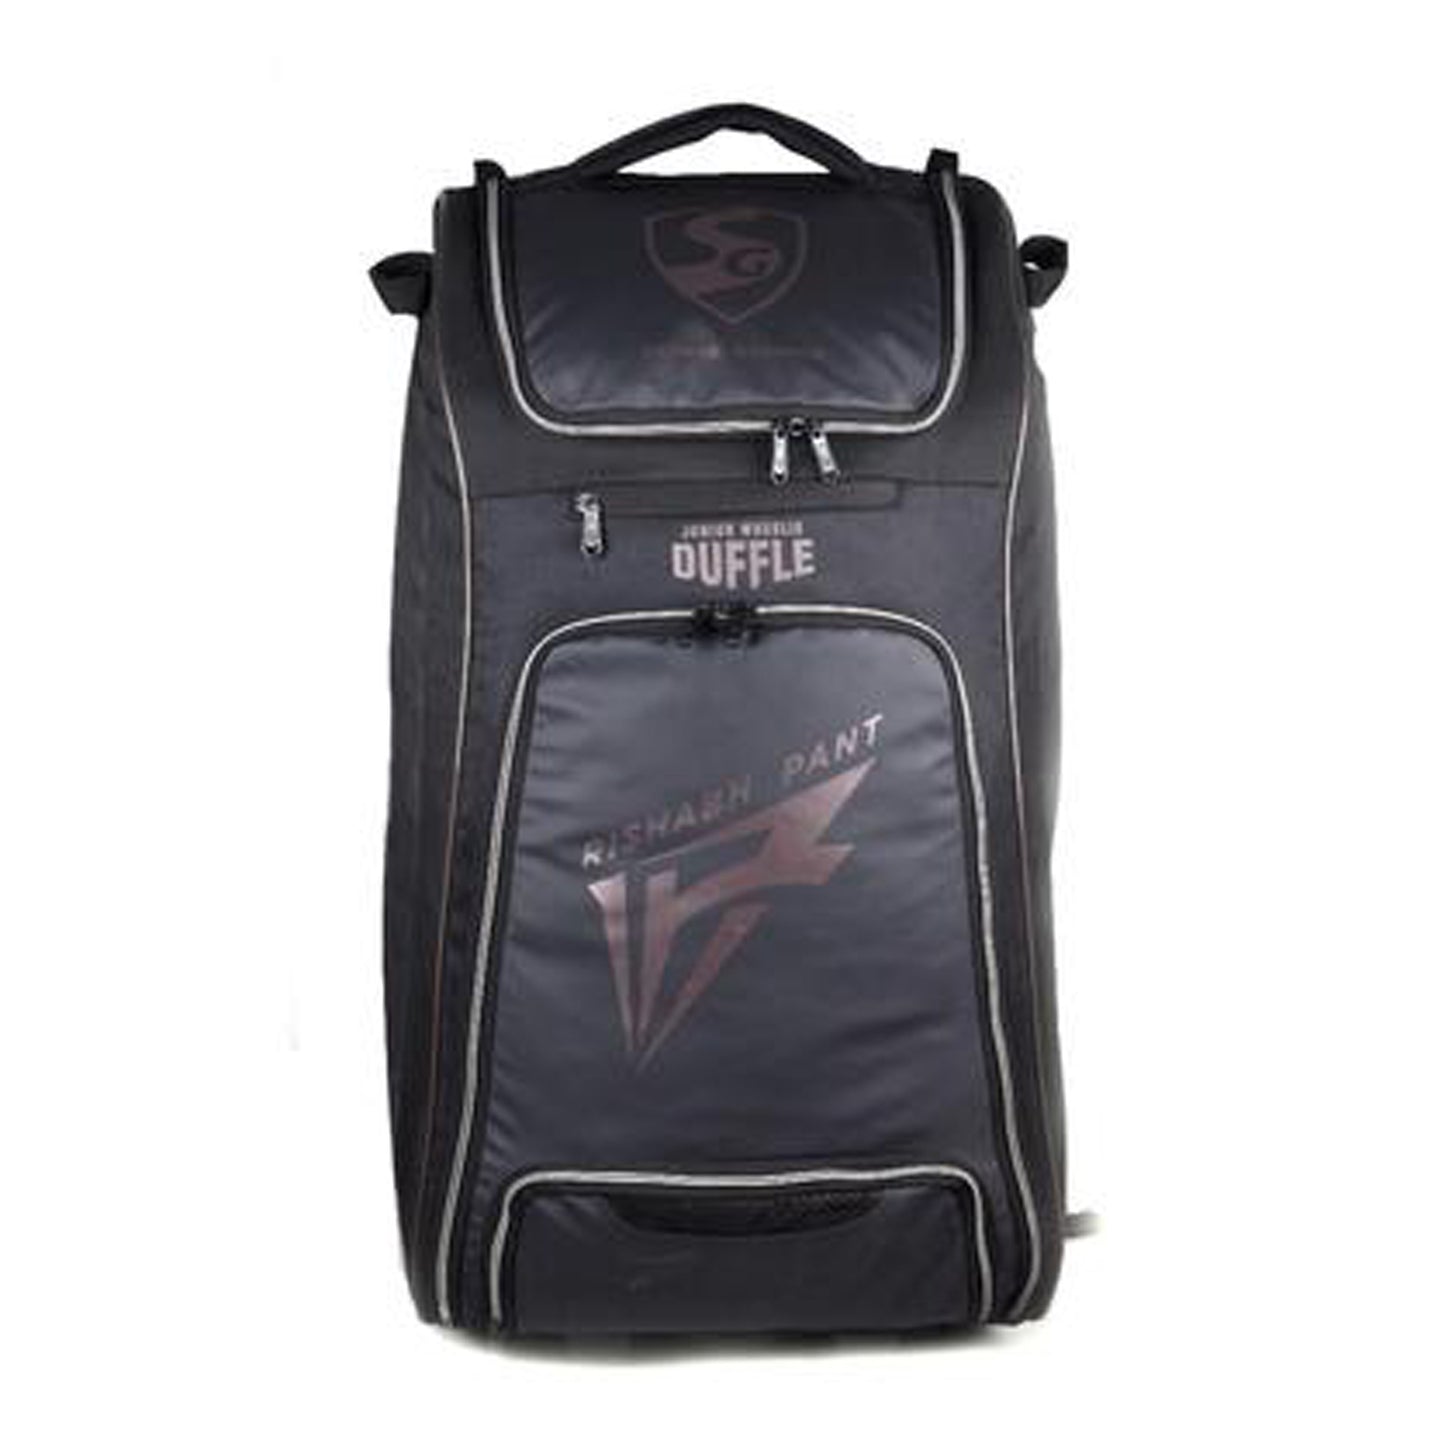 SG Duffle RP Junior Cricket Kit Bag - Best Price online Prokicksports.com